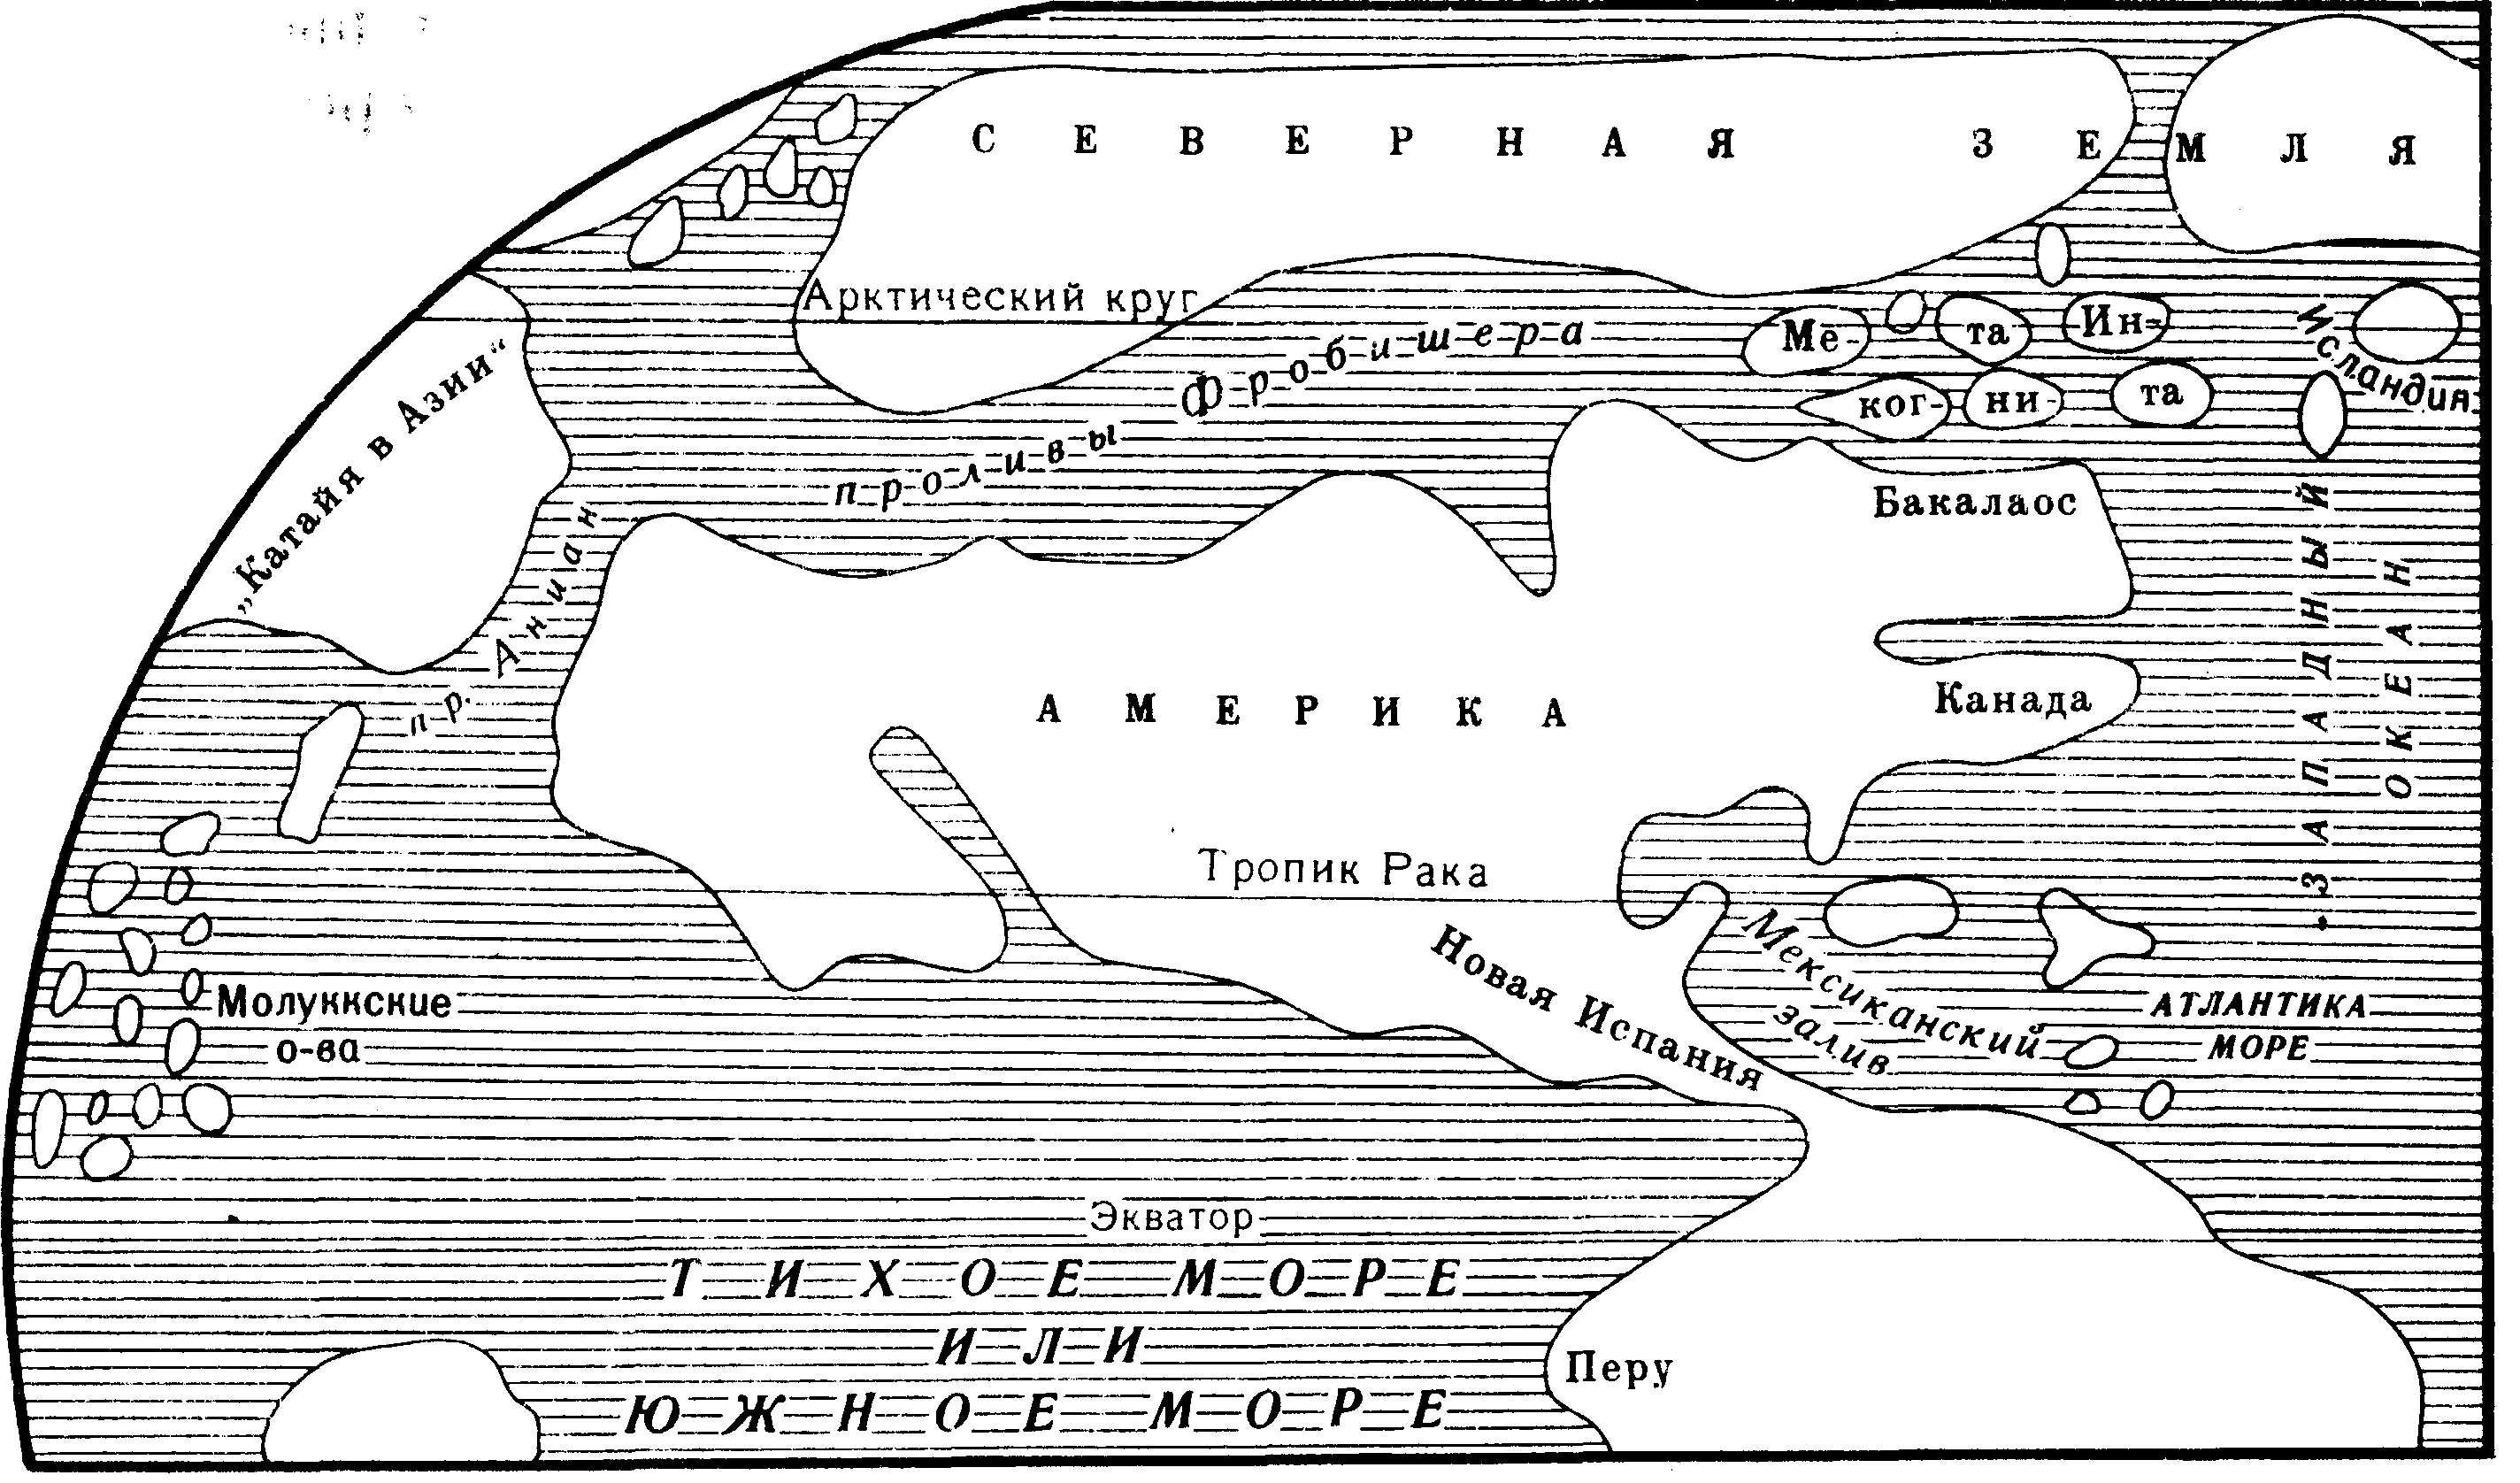 Деталь карты М. Фробишера